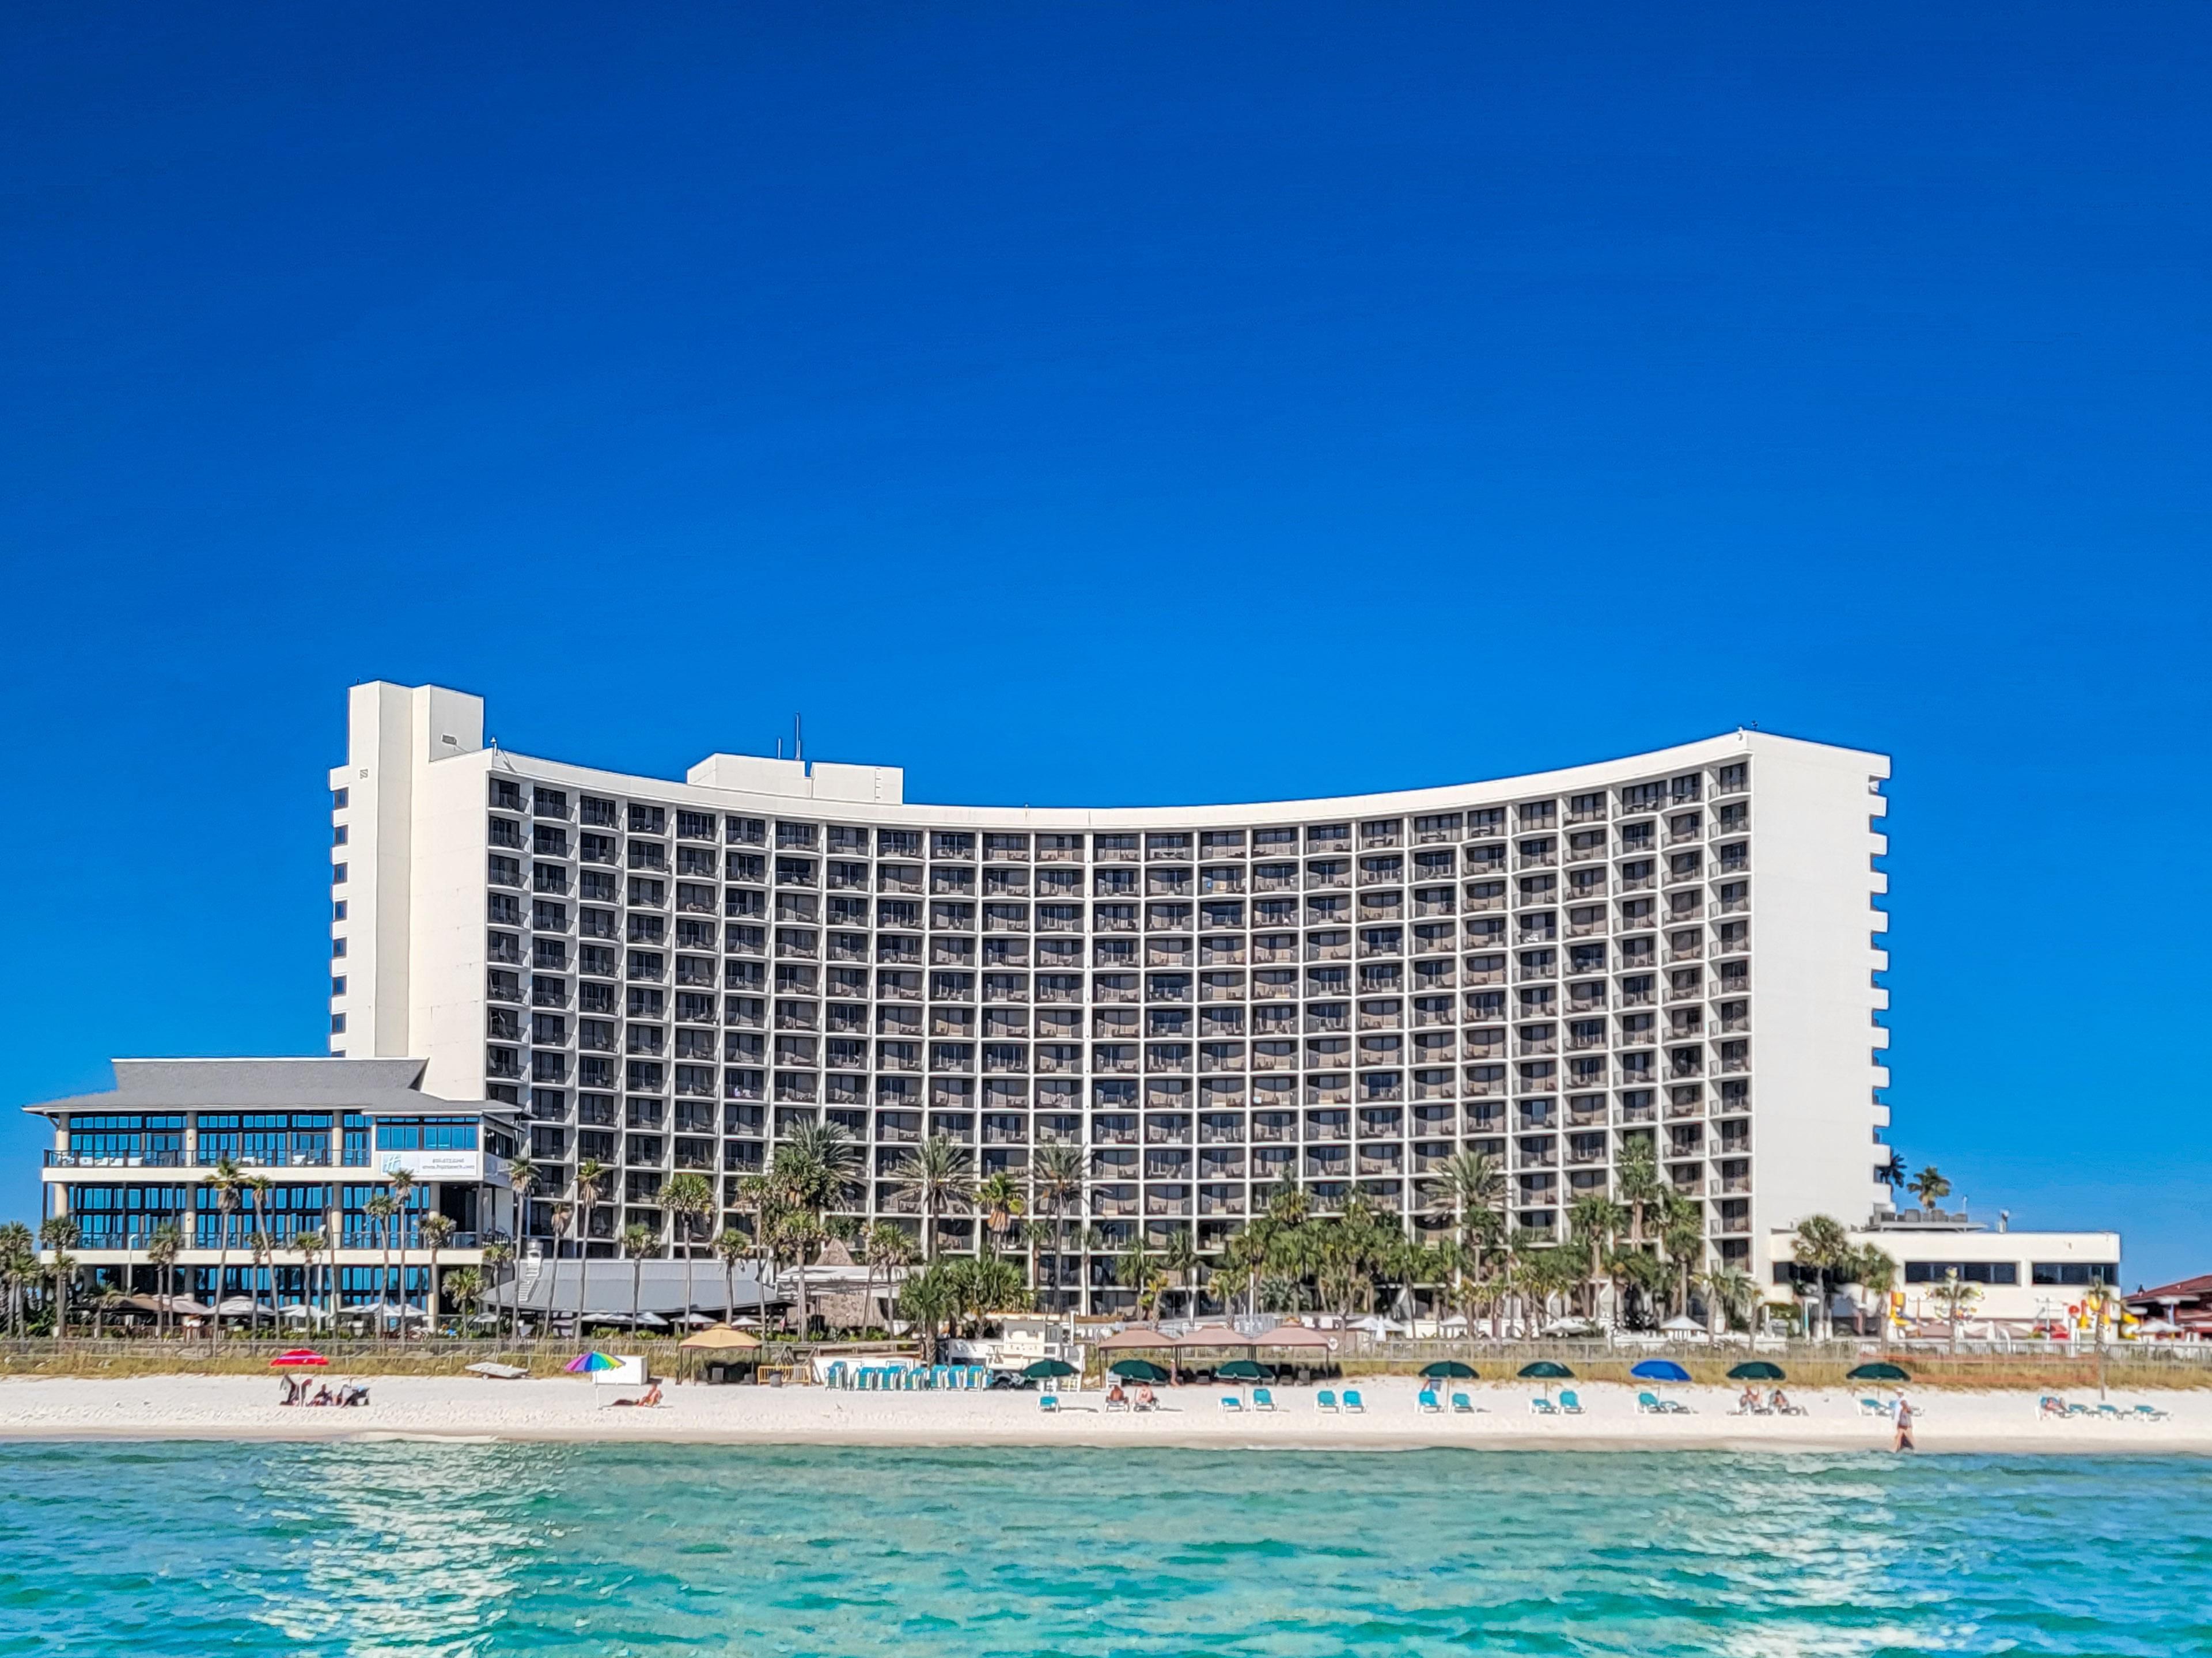 Holiday Inn Resort Panama City Beach 8957206202 4x3